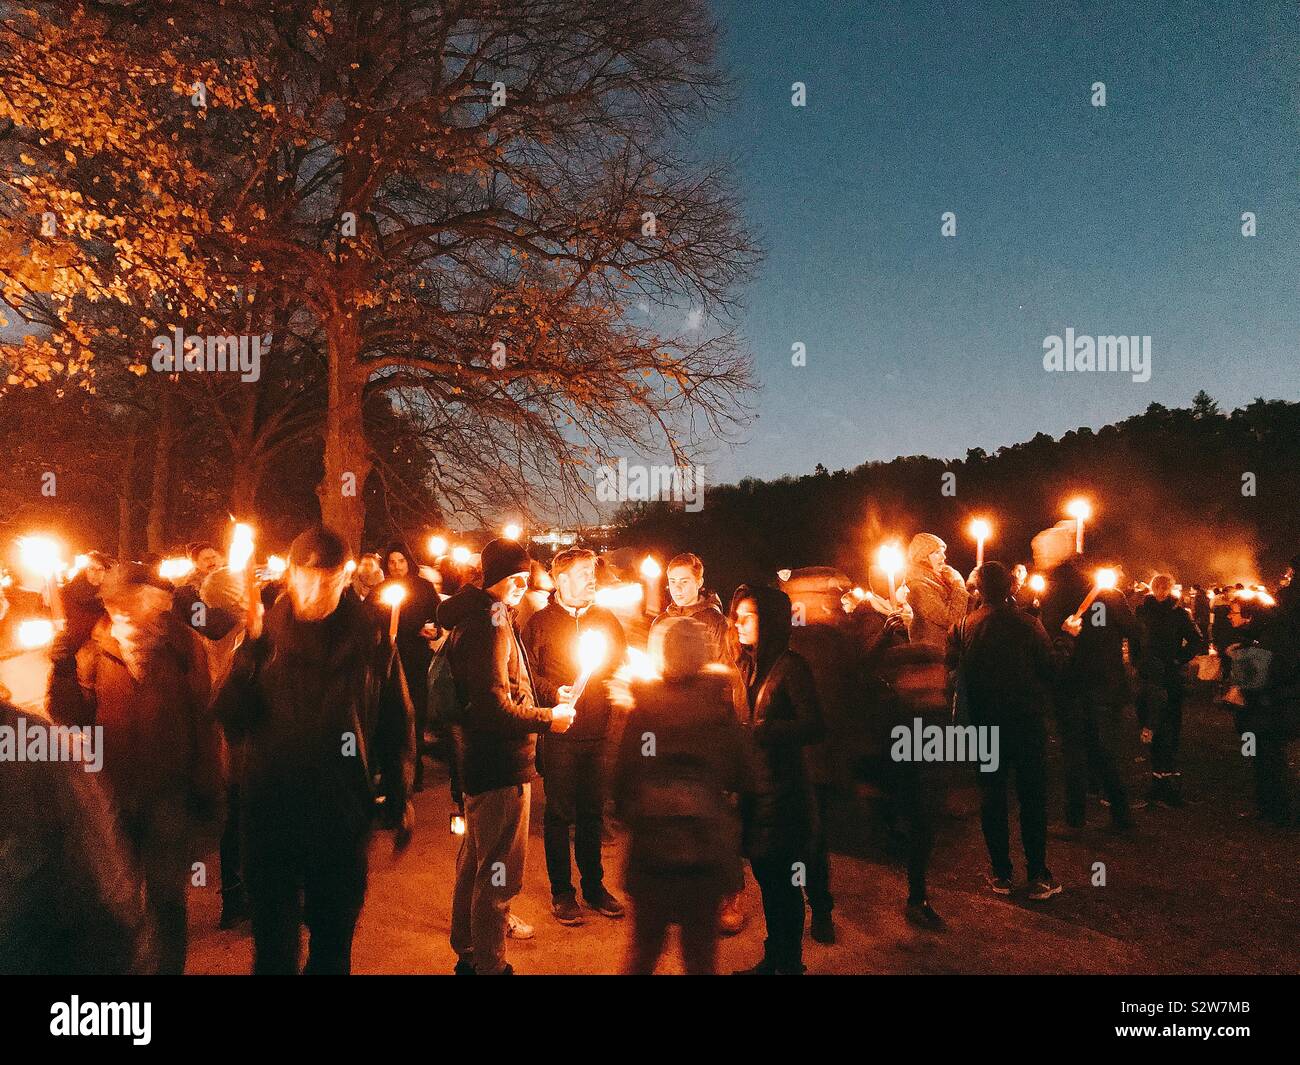 Annual Light Festival in Stockholm, Sweden Stock Photo - Alamy